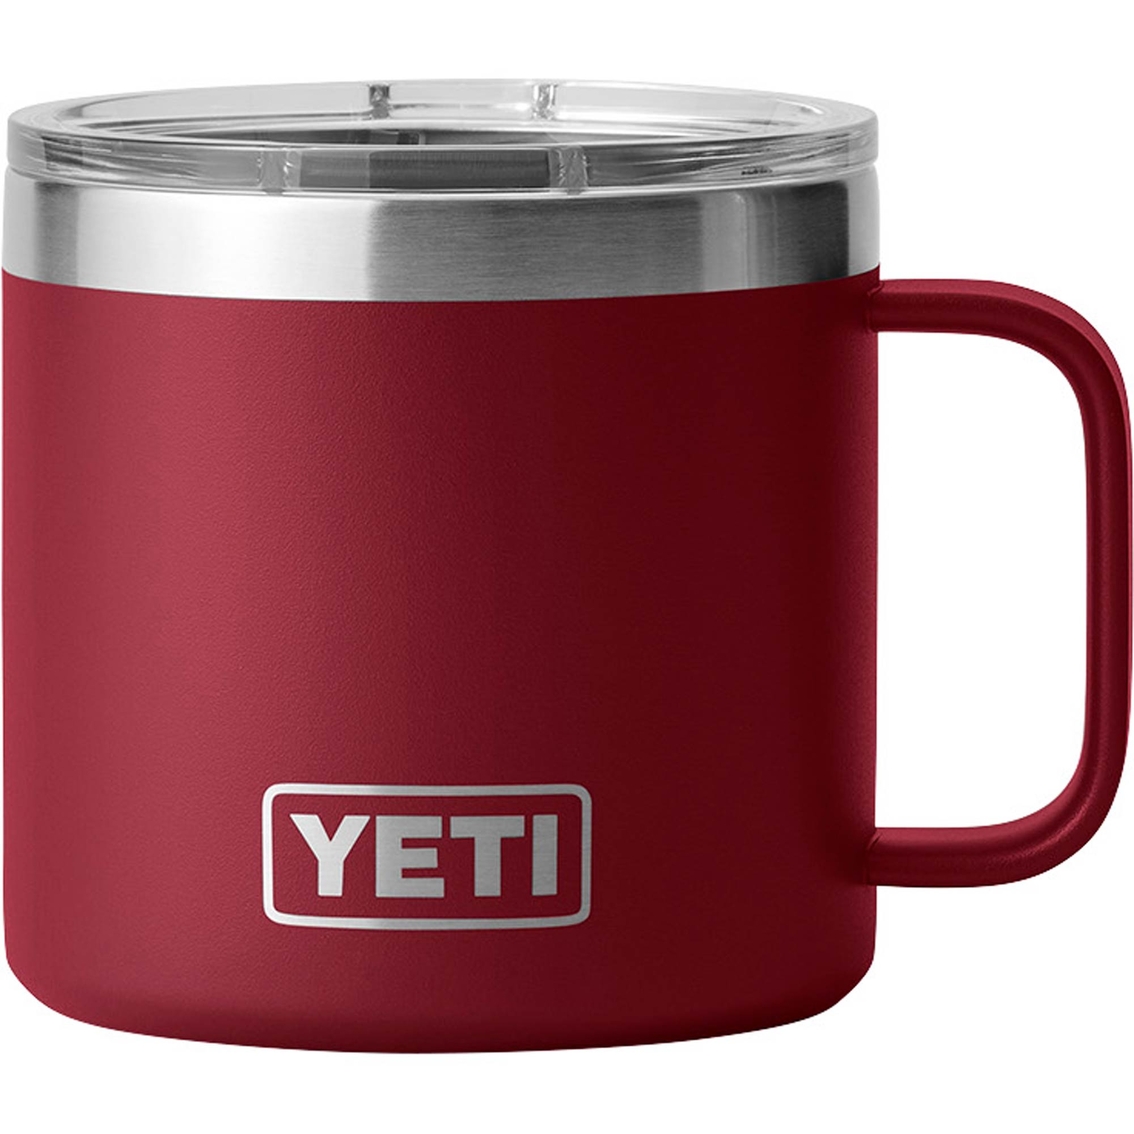 Yeti Rambler 14 Oz. Mug, Travel Mugs, Sports & Outdoors